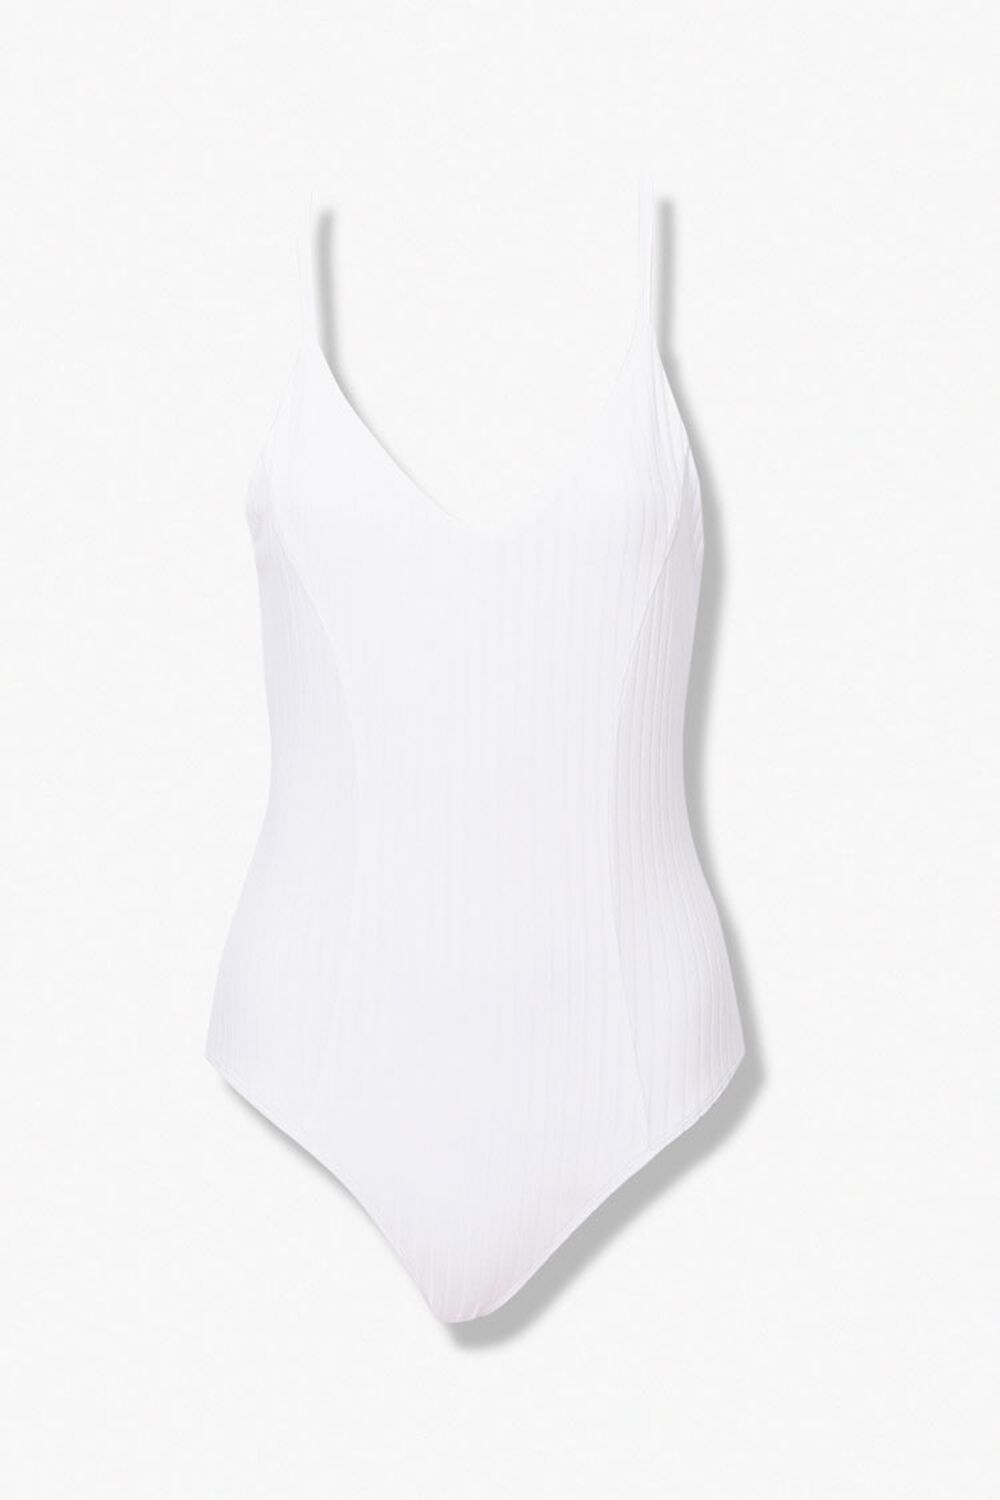 WHITE Lace-Back Cutout Bodysuit, image 1